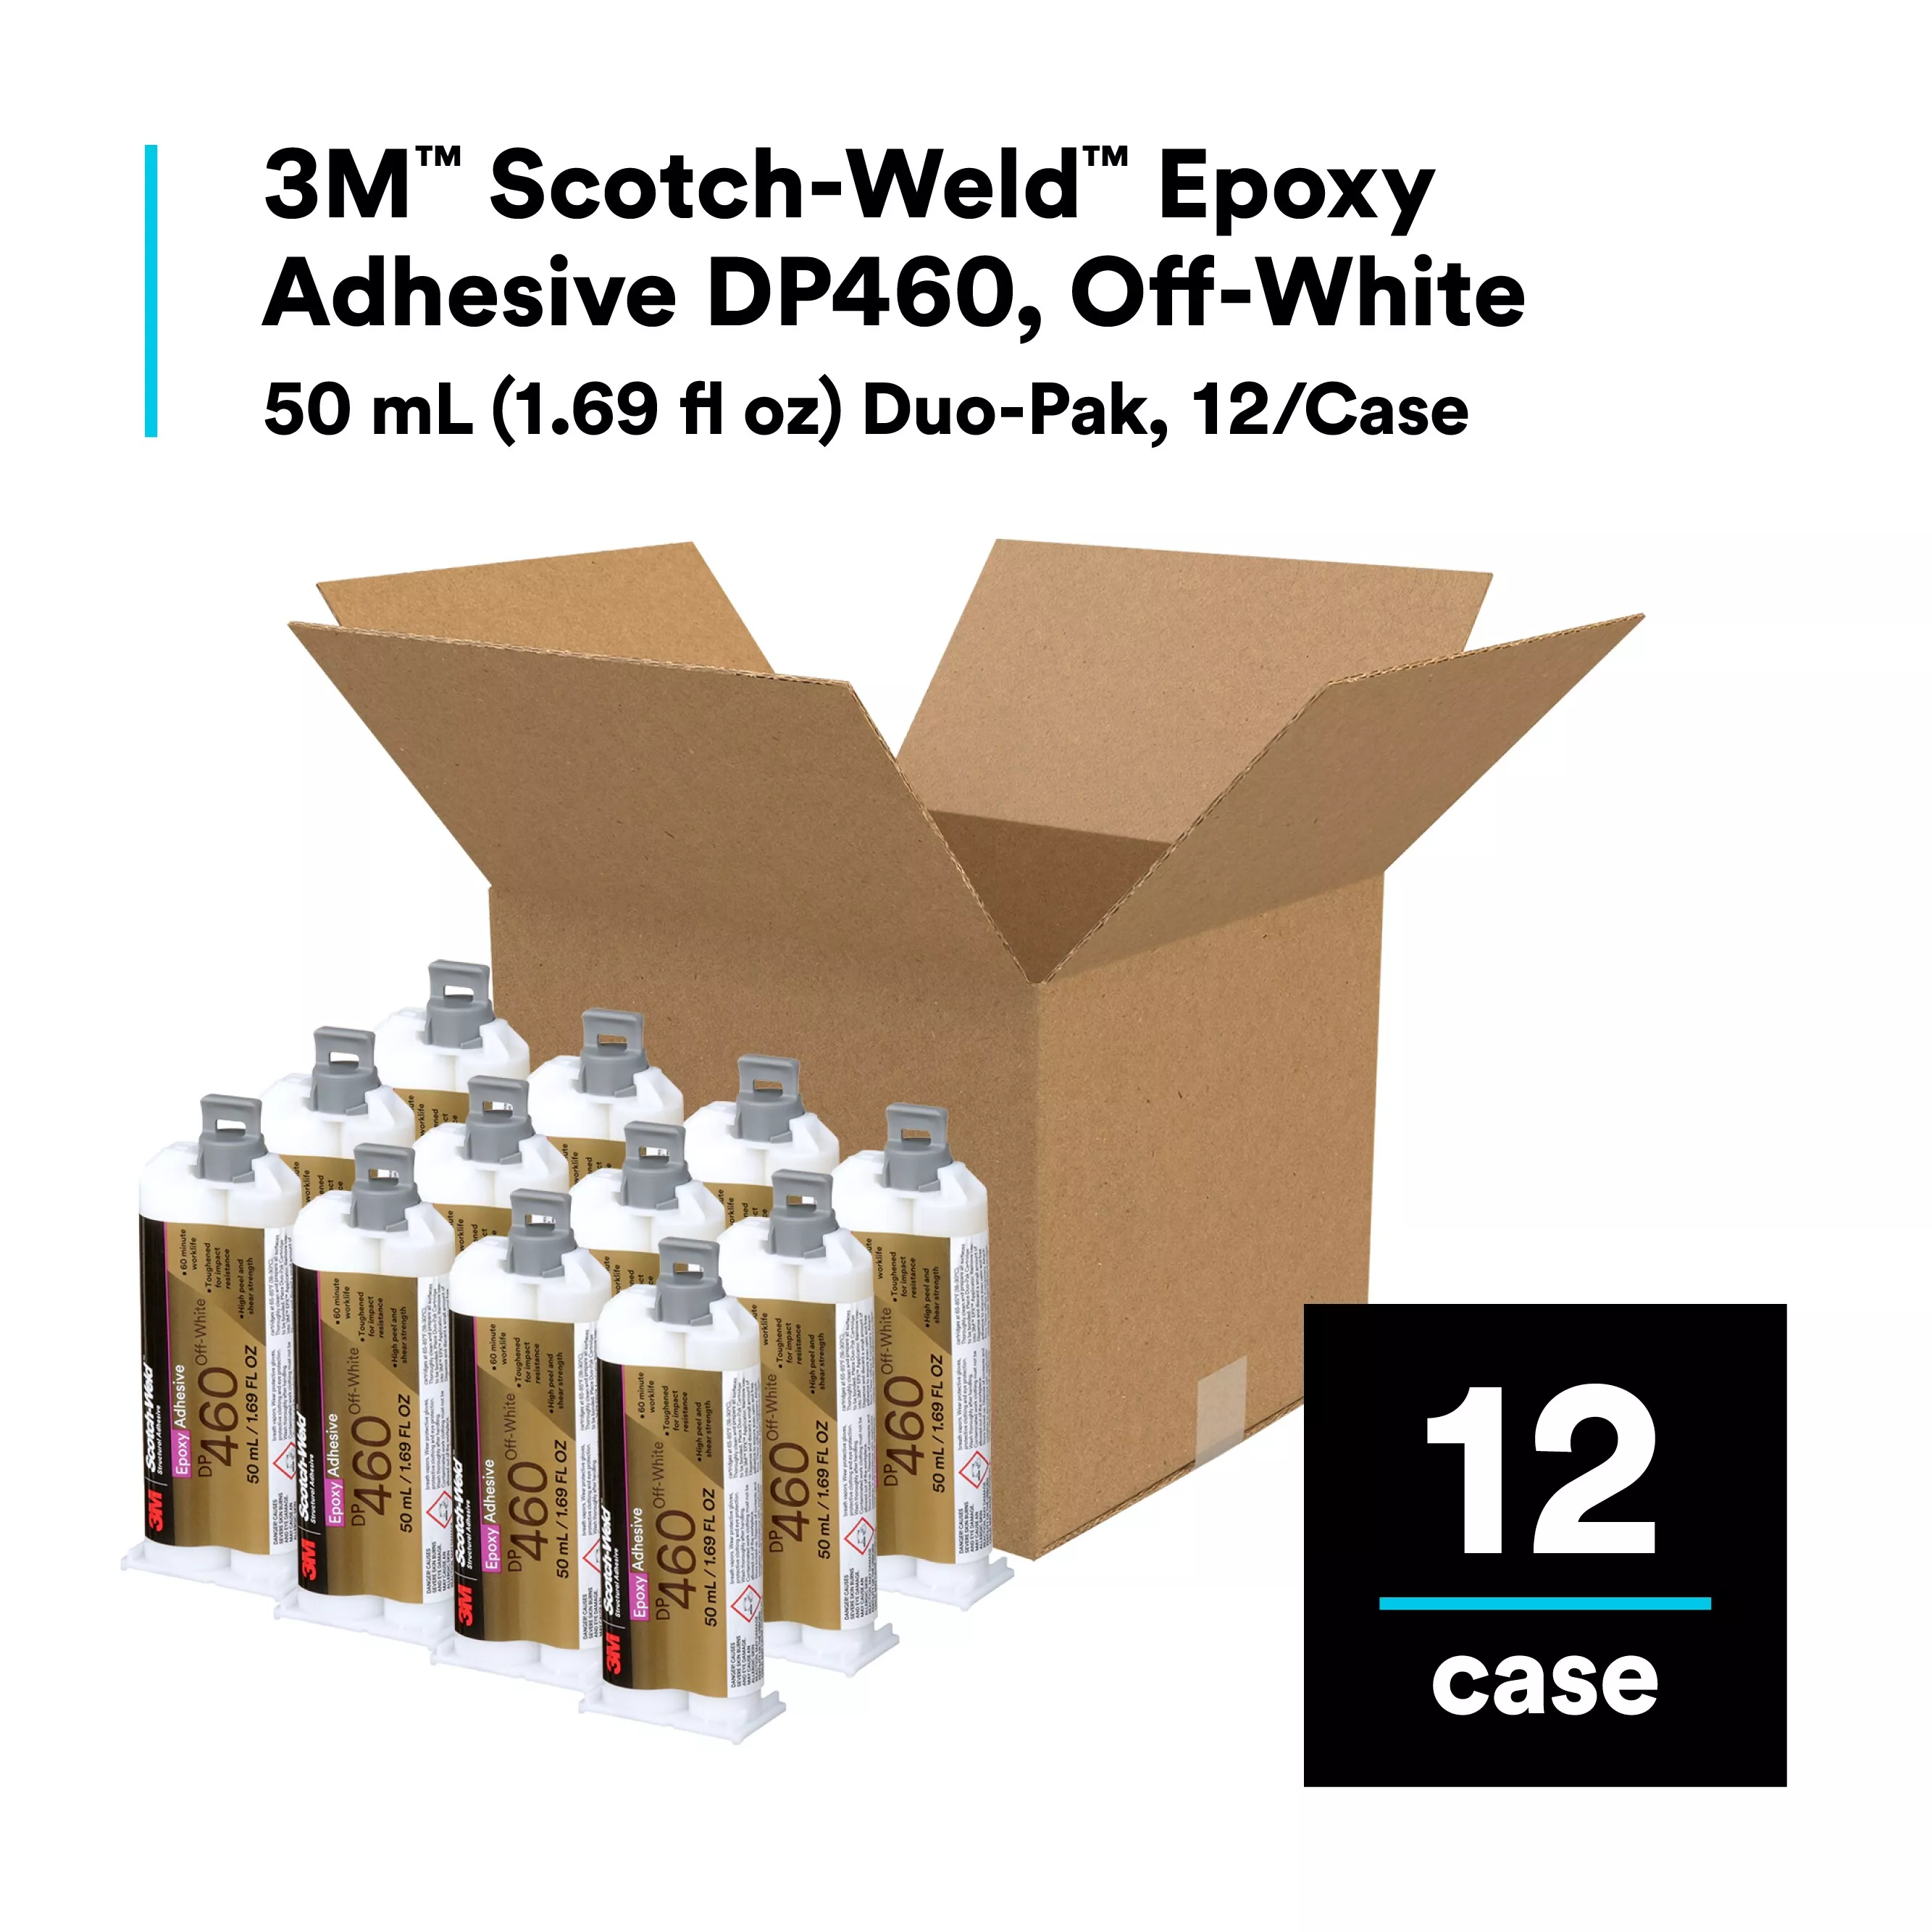 SKU 7100148768 | 3M™ Scotch-Weld™ Epoxy Adhesive DP460